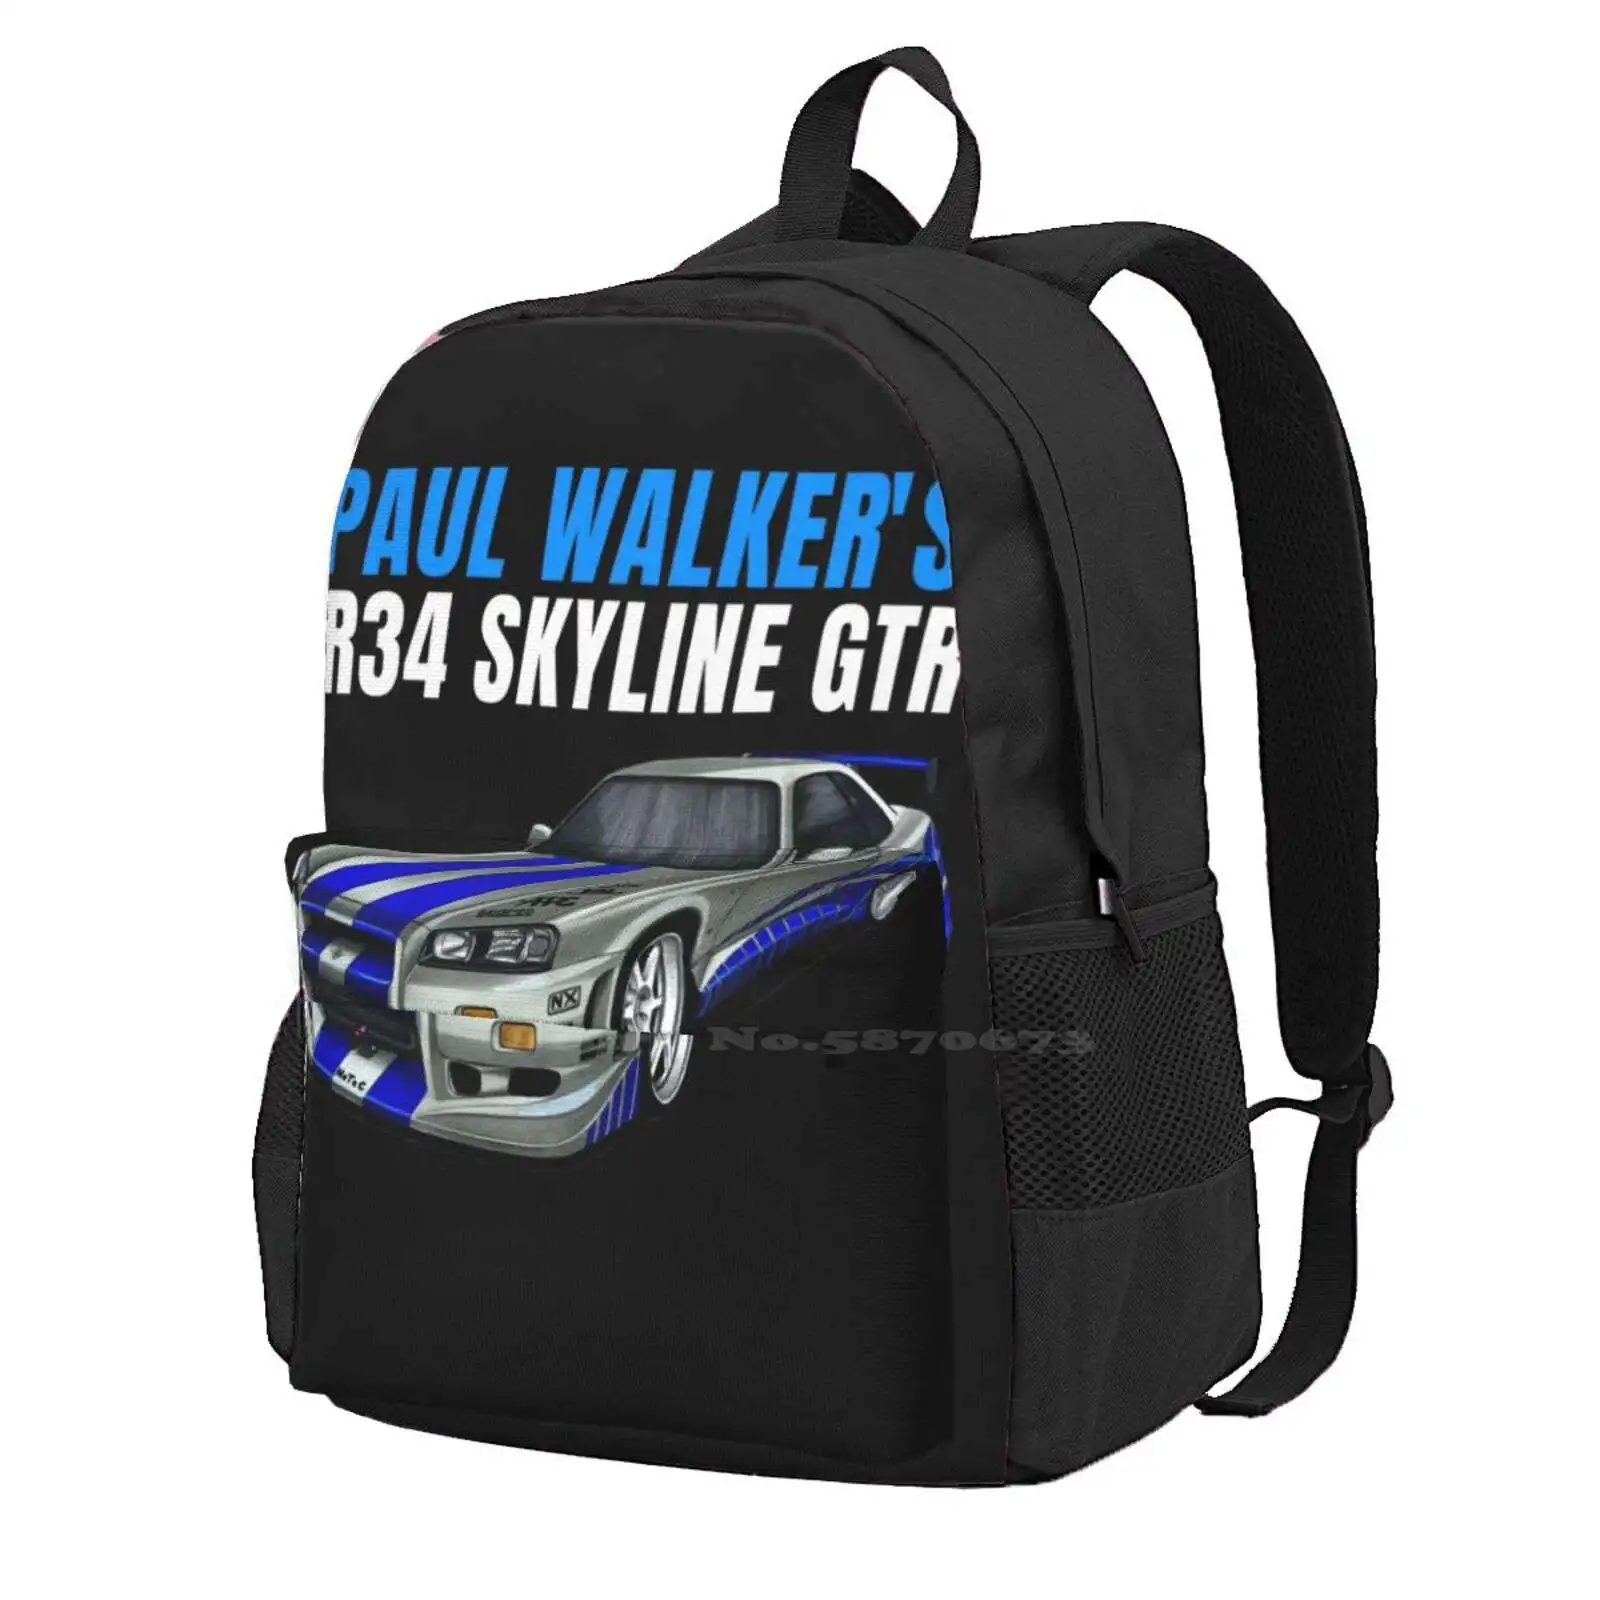 

Paul Walker'S R34 Skyline Gtr Hot Sale Backpack Fashion Bags Paul Walker Fast And Furious Vin Race Cars Skyline Dom Jdm Movie